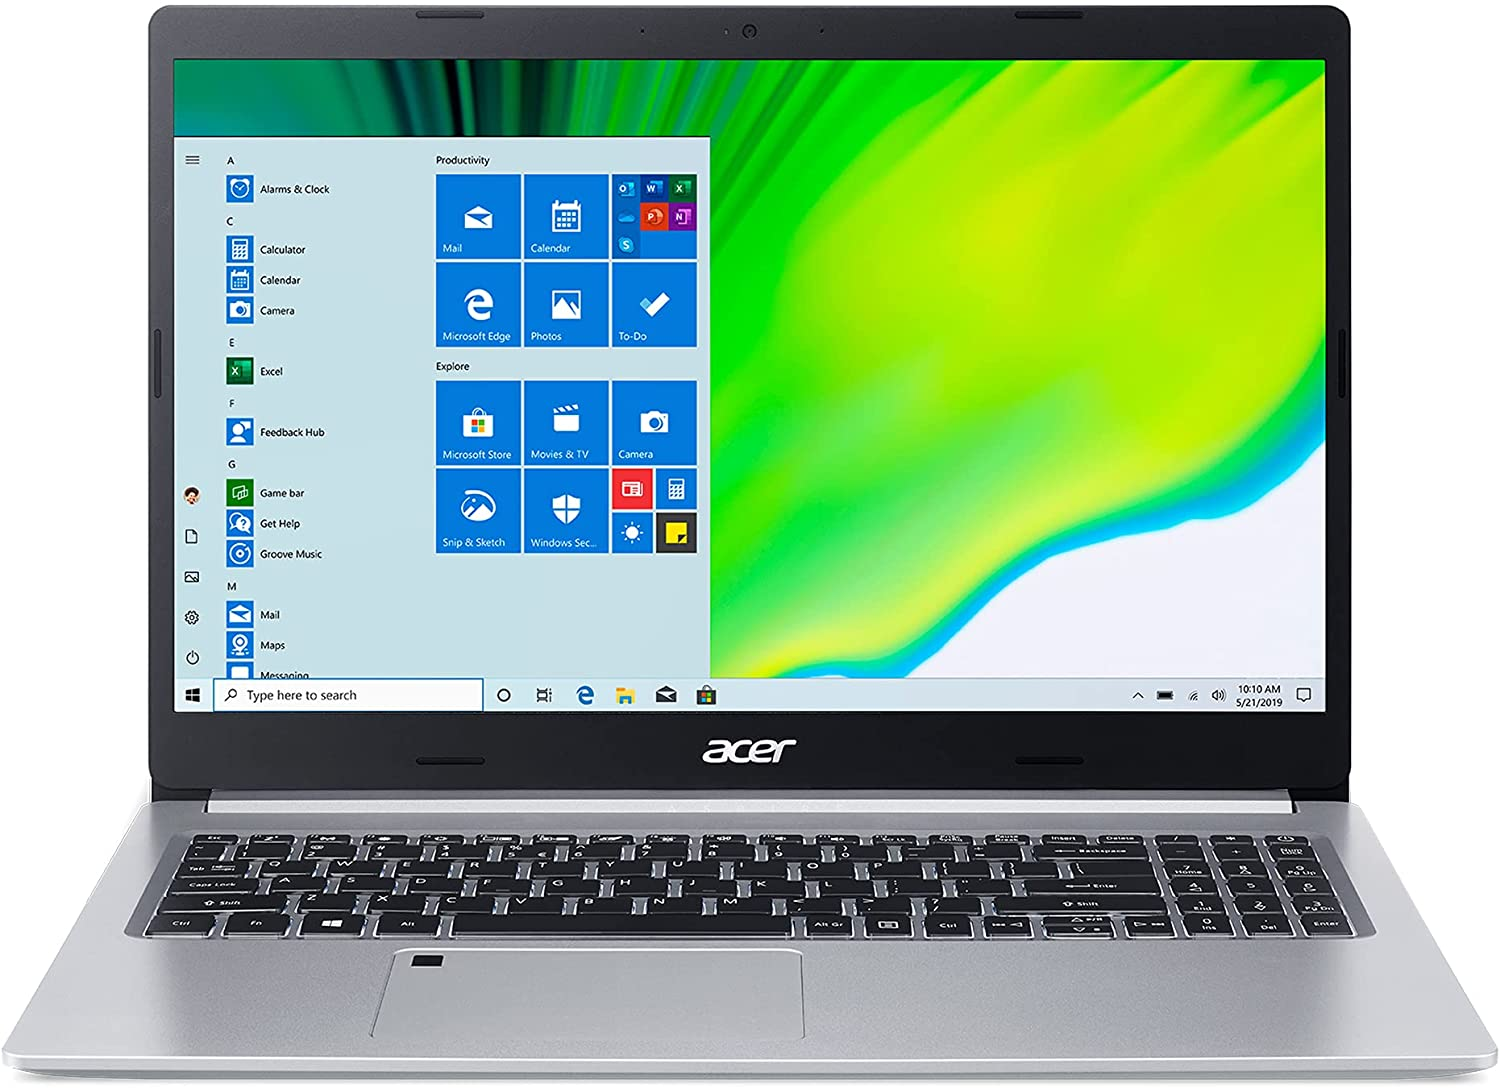 Amazon.com: Acer Aspire 5 A515-46-R14K Slim Laptop | 15.6" Full HD IPS | AMD Ryzen 3 3350U Quad-Core Mobile Processor | 4GB DDR4 | 128GB NVMe SSD | WiFi 6 | Backlit KB $364.99